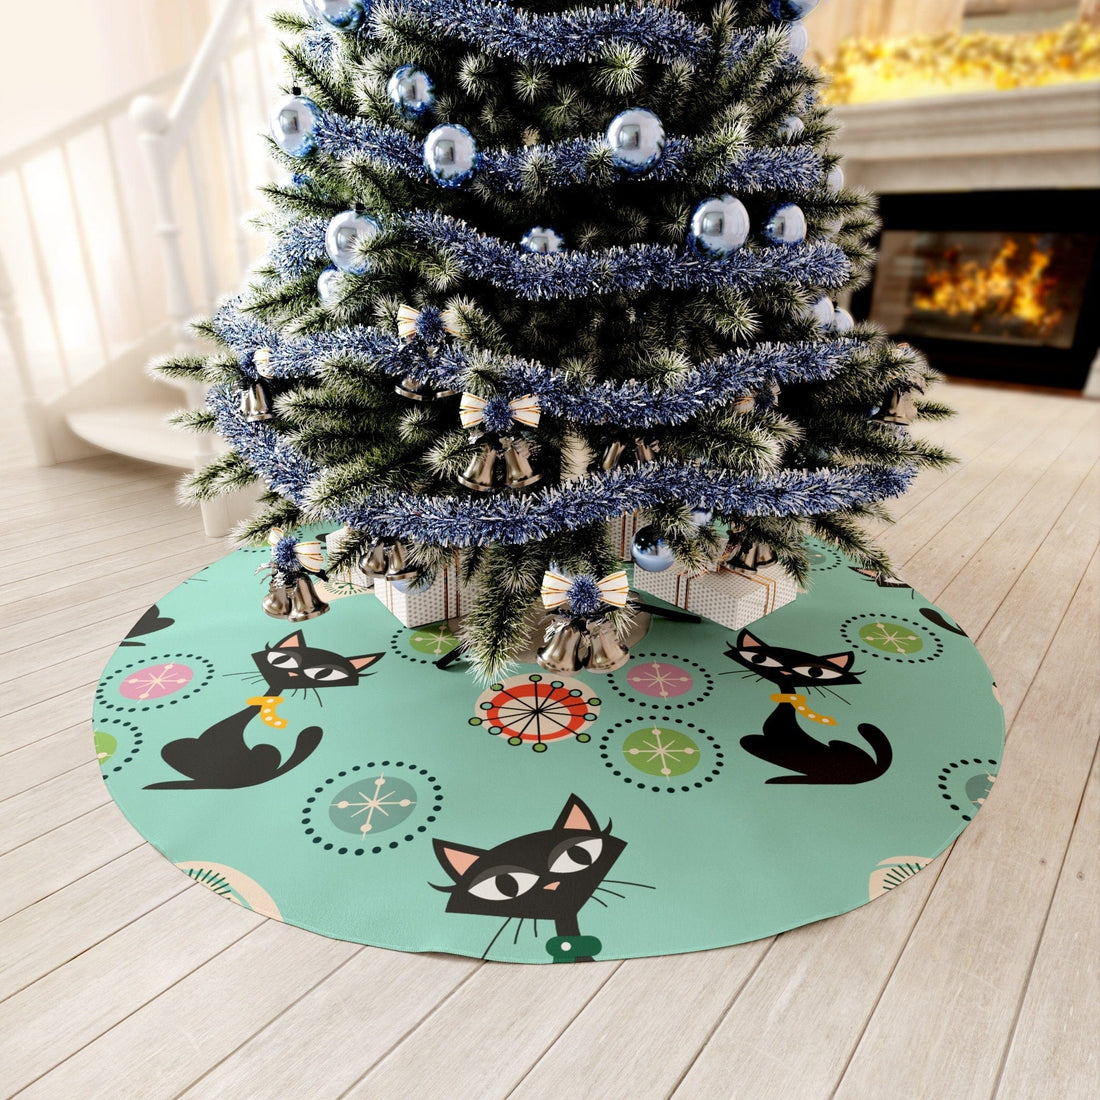 Kate McEnroe New York Atomic Cat Round Tree Skirt, Mid Century Kitschy Holiday, Retro Vintage Christmas Tree DecorChristmas Tree Skirts22467957878388827427